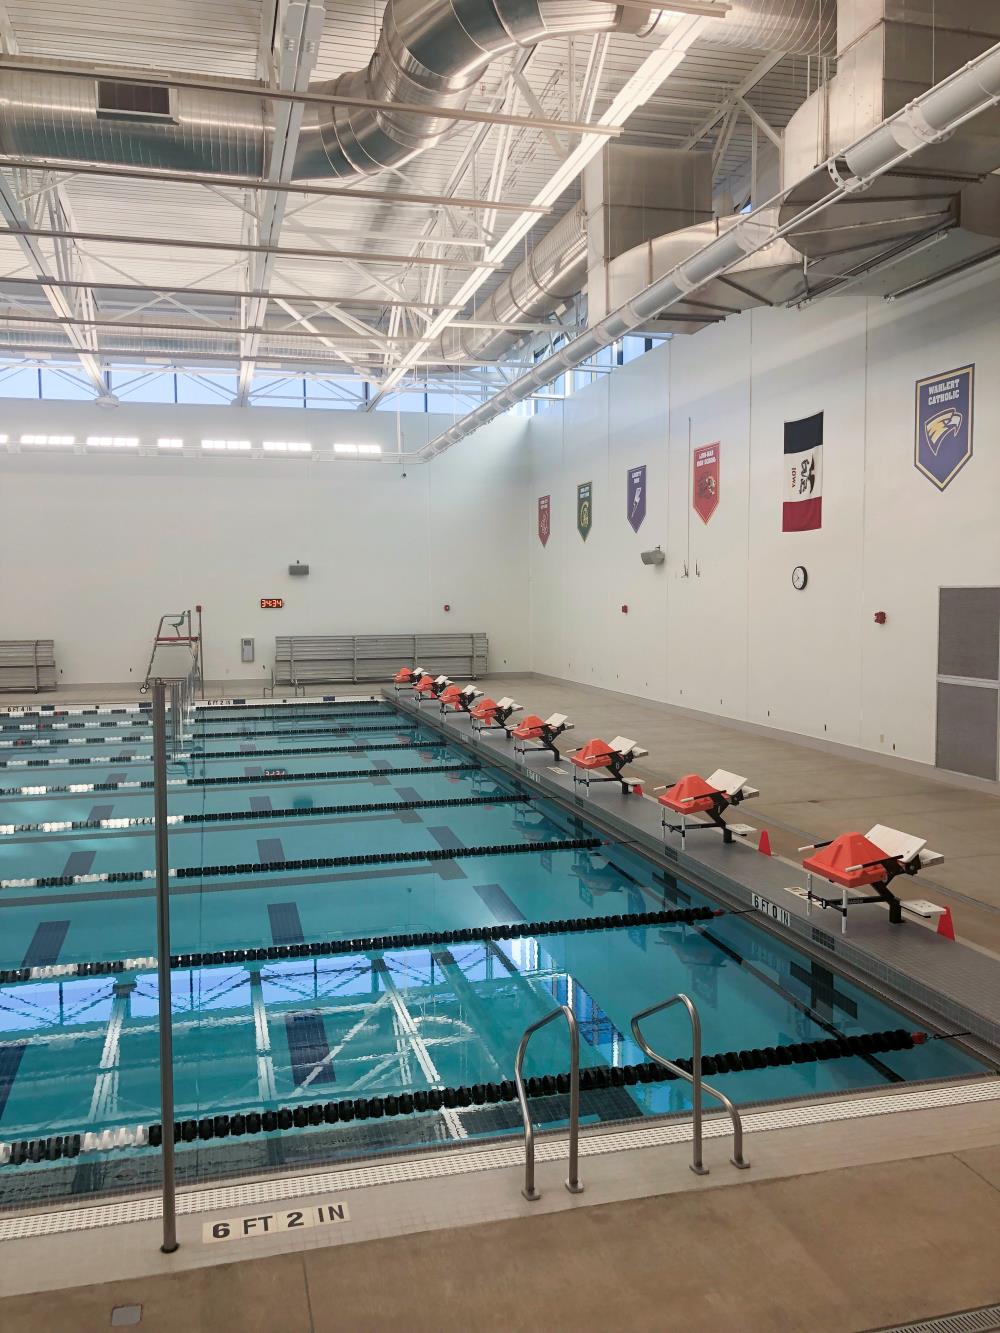 Lightruss LED Gen 1 - Dubuque Community School District Aquatic Center Renovation and Addition, Hempstead High School